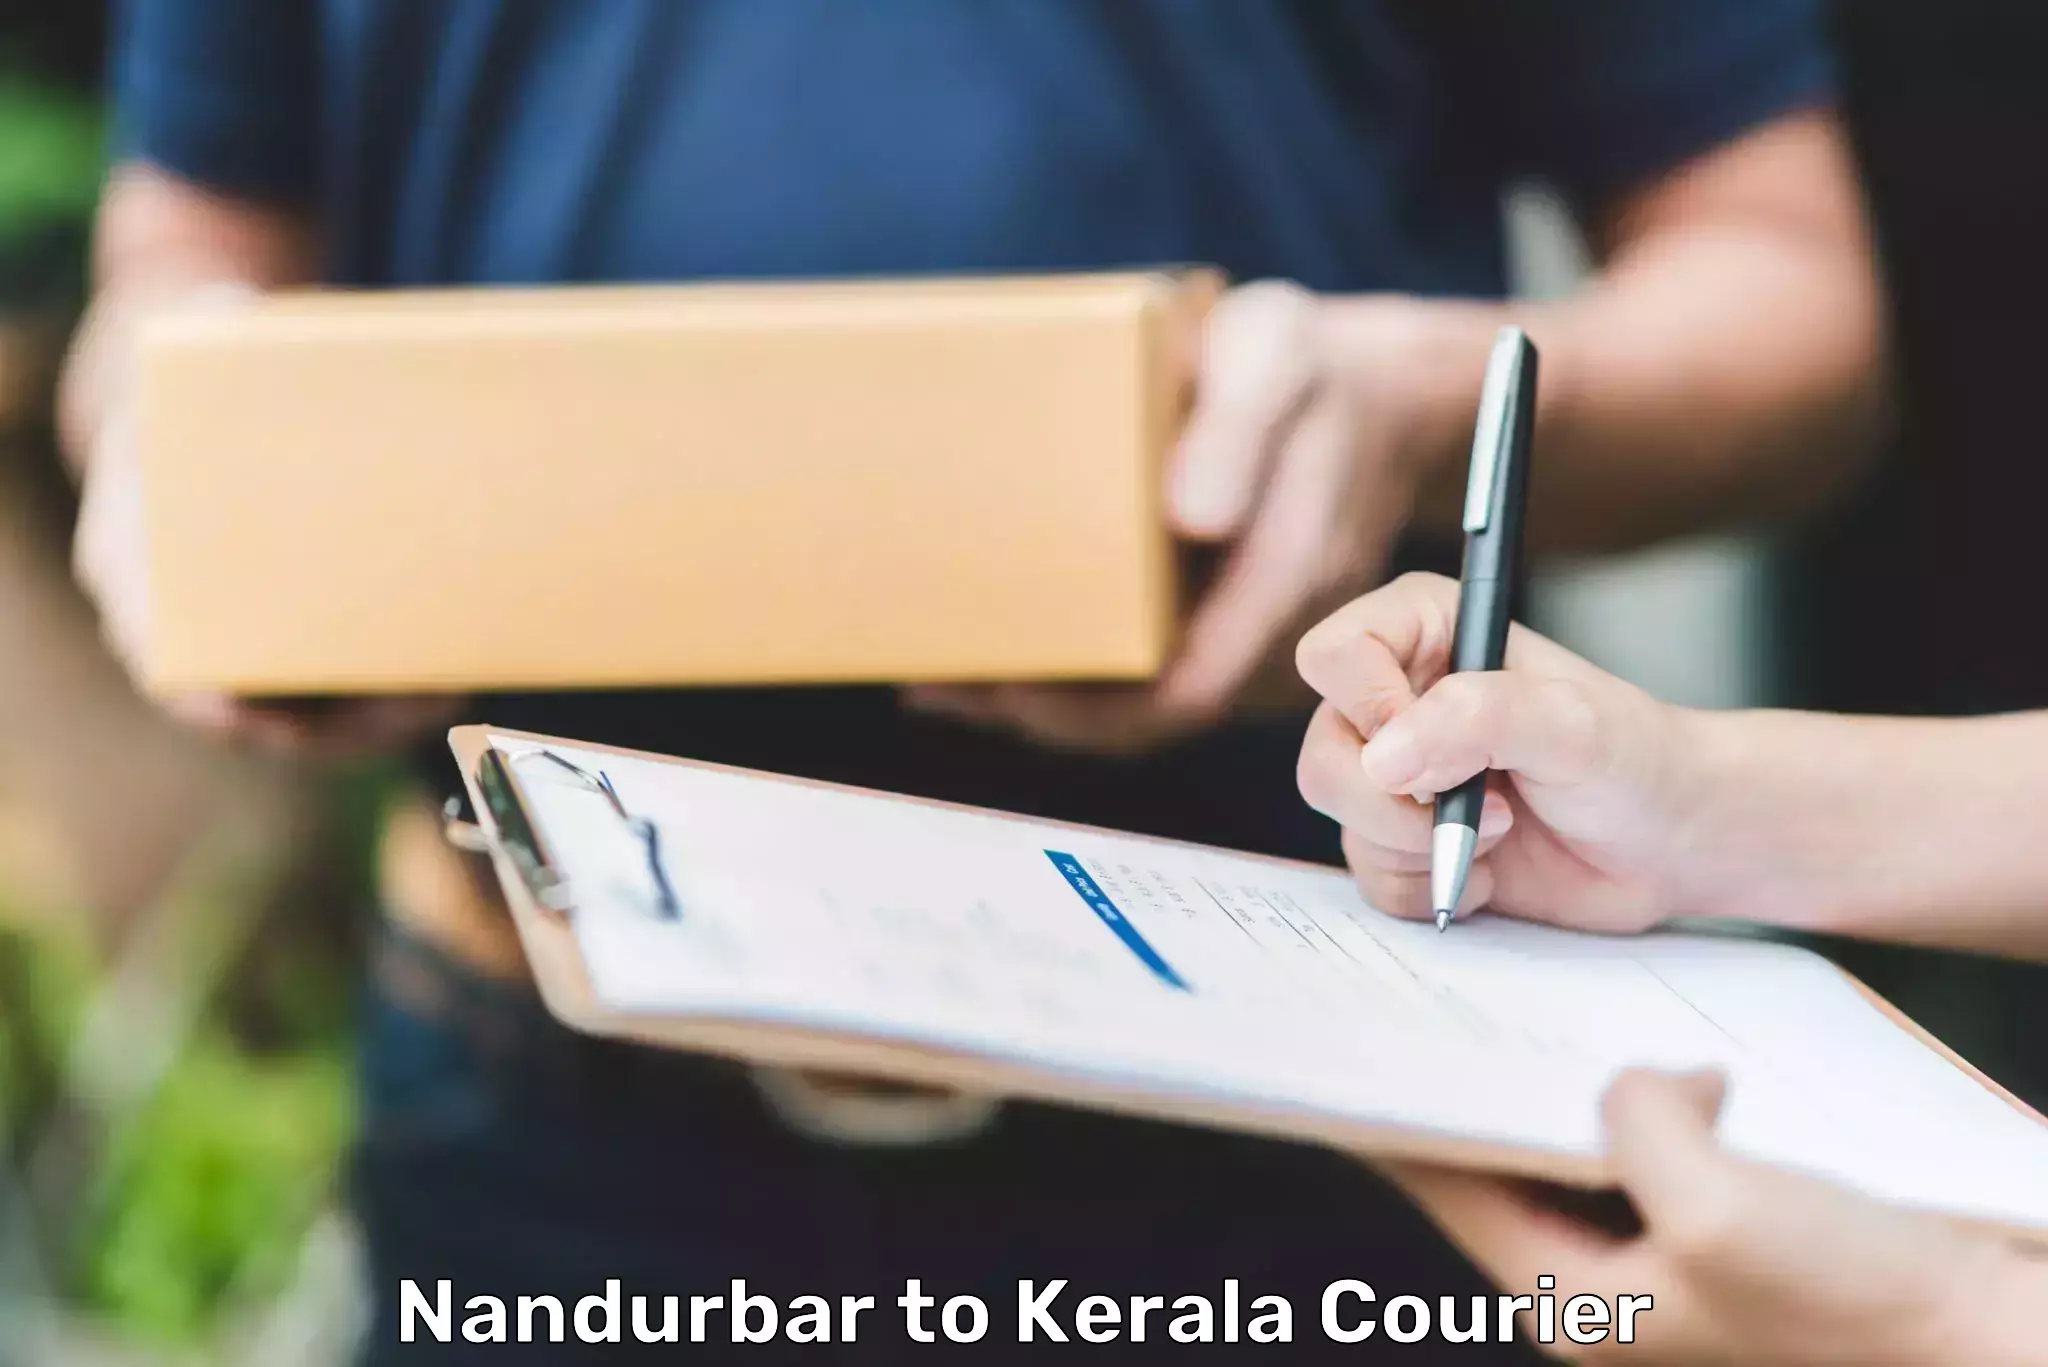 Bulk shipping discounts Nandurbar to Cochin Port Kochi